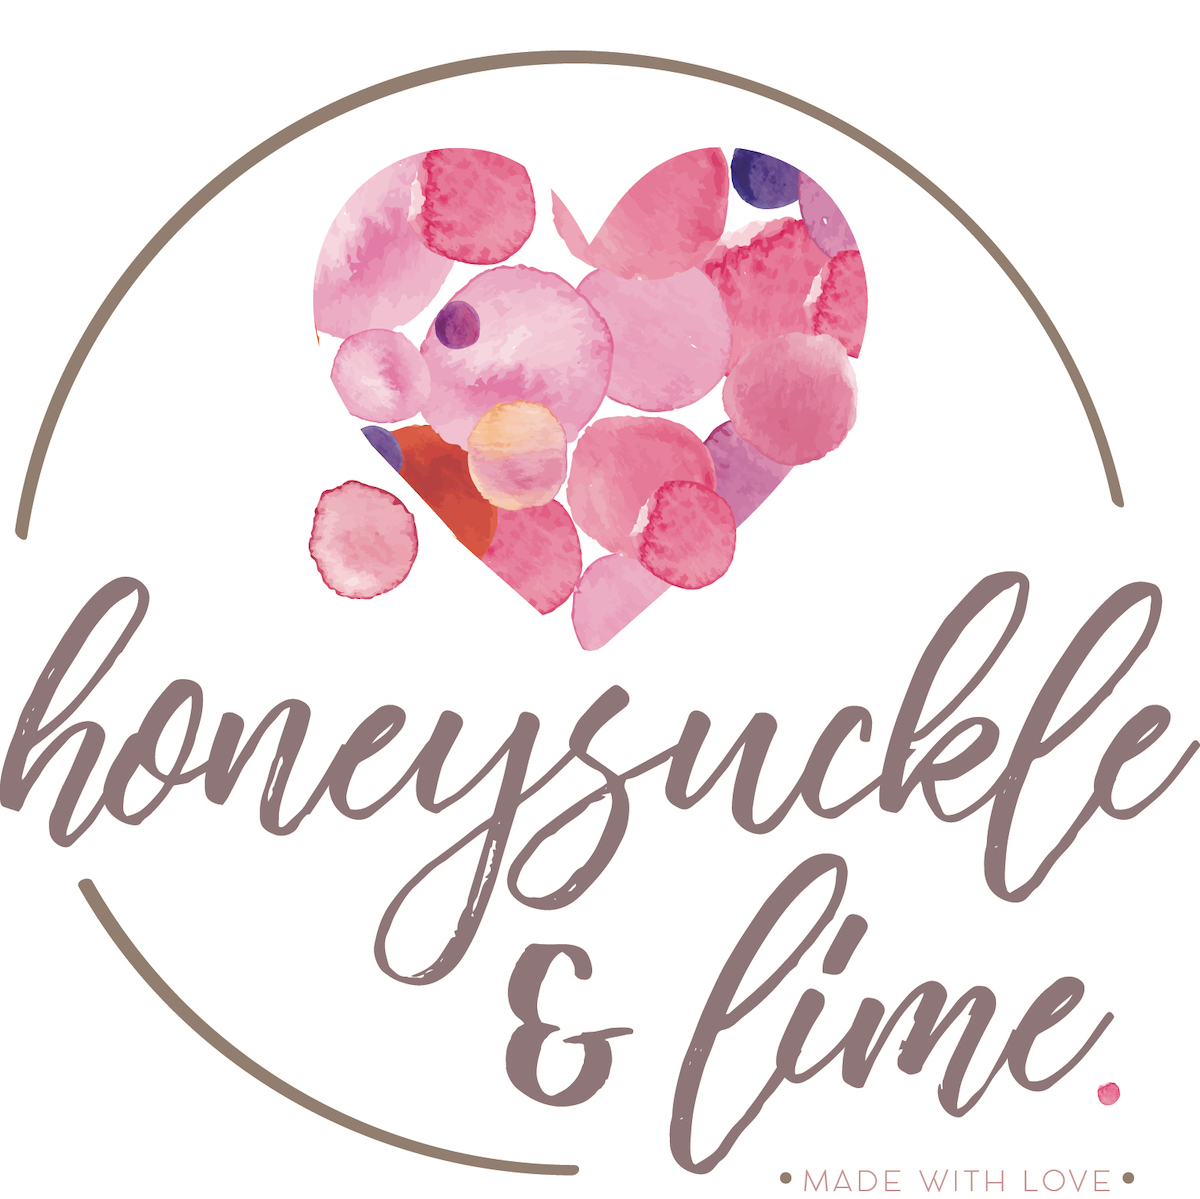 Honeysuckle & Lime